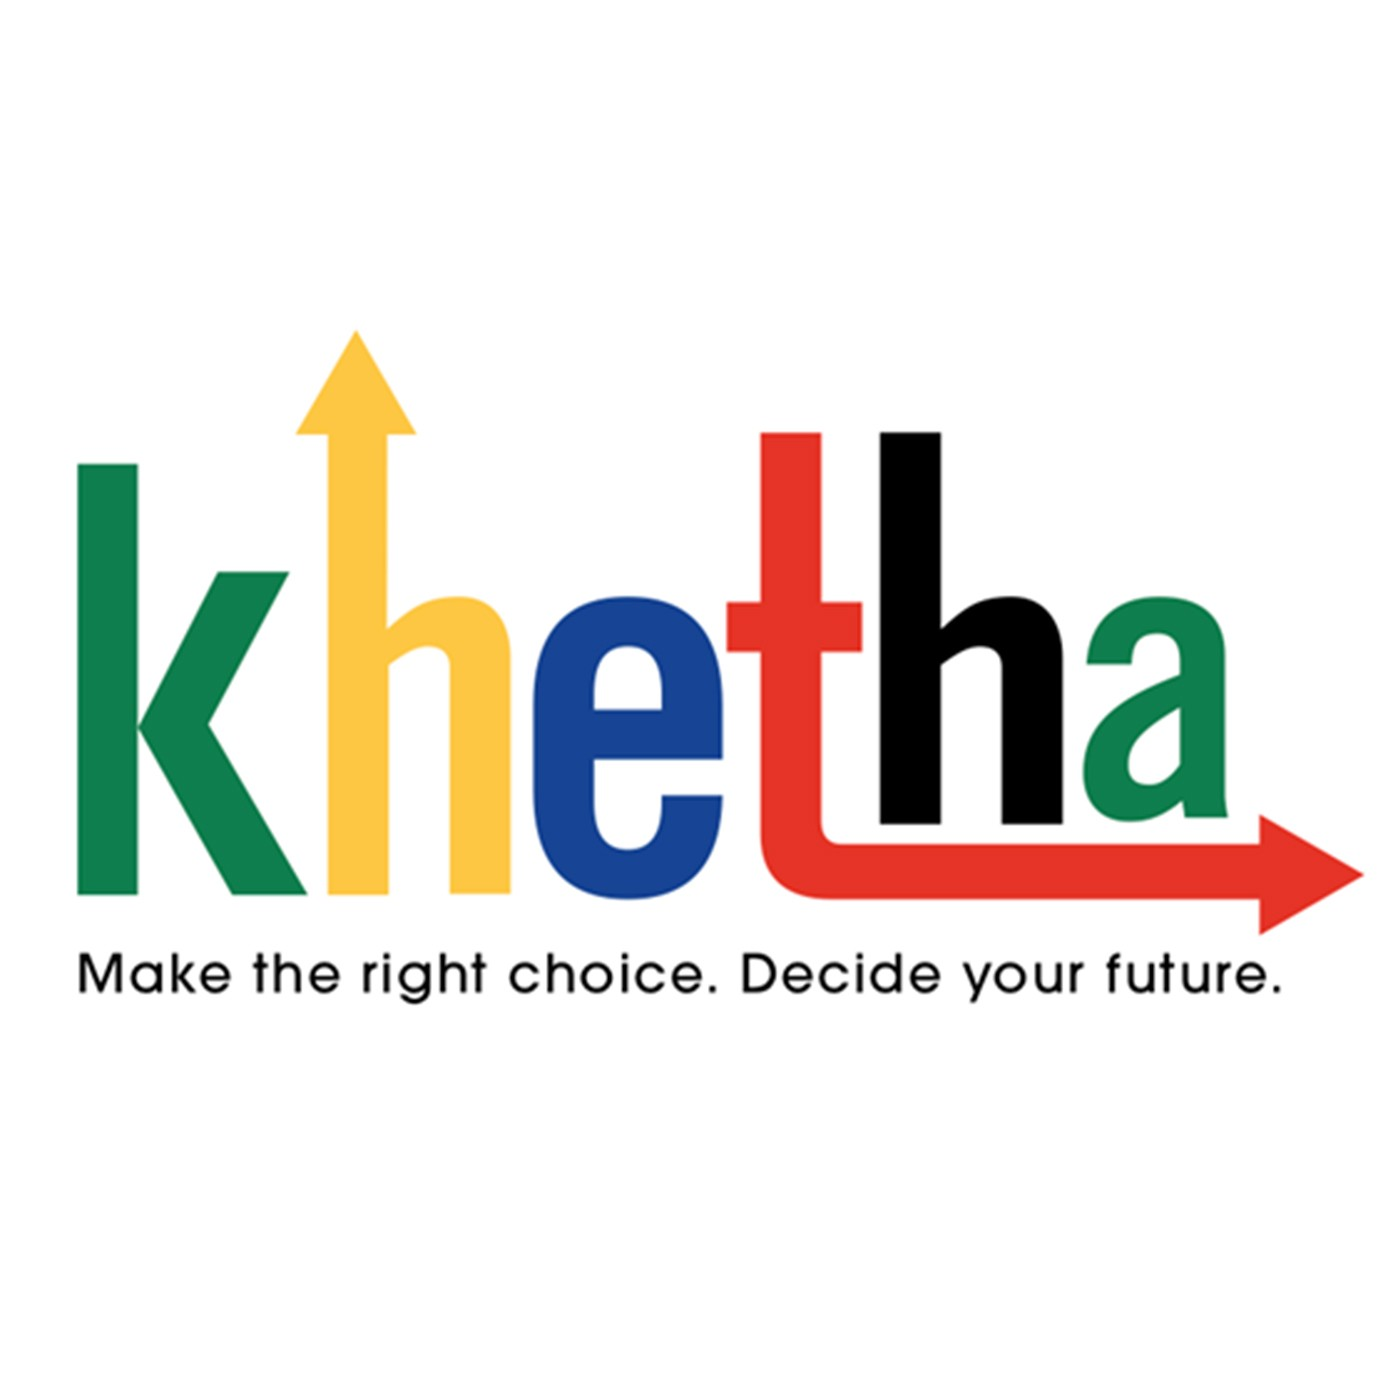 Khetha 17 February 2020